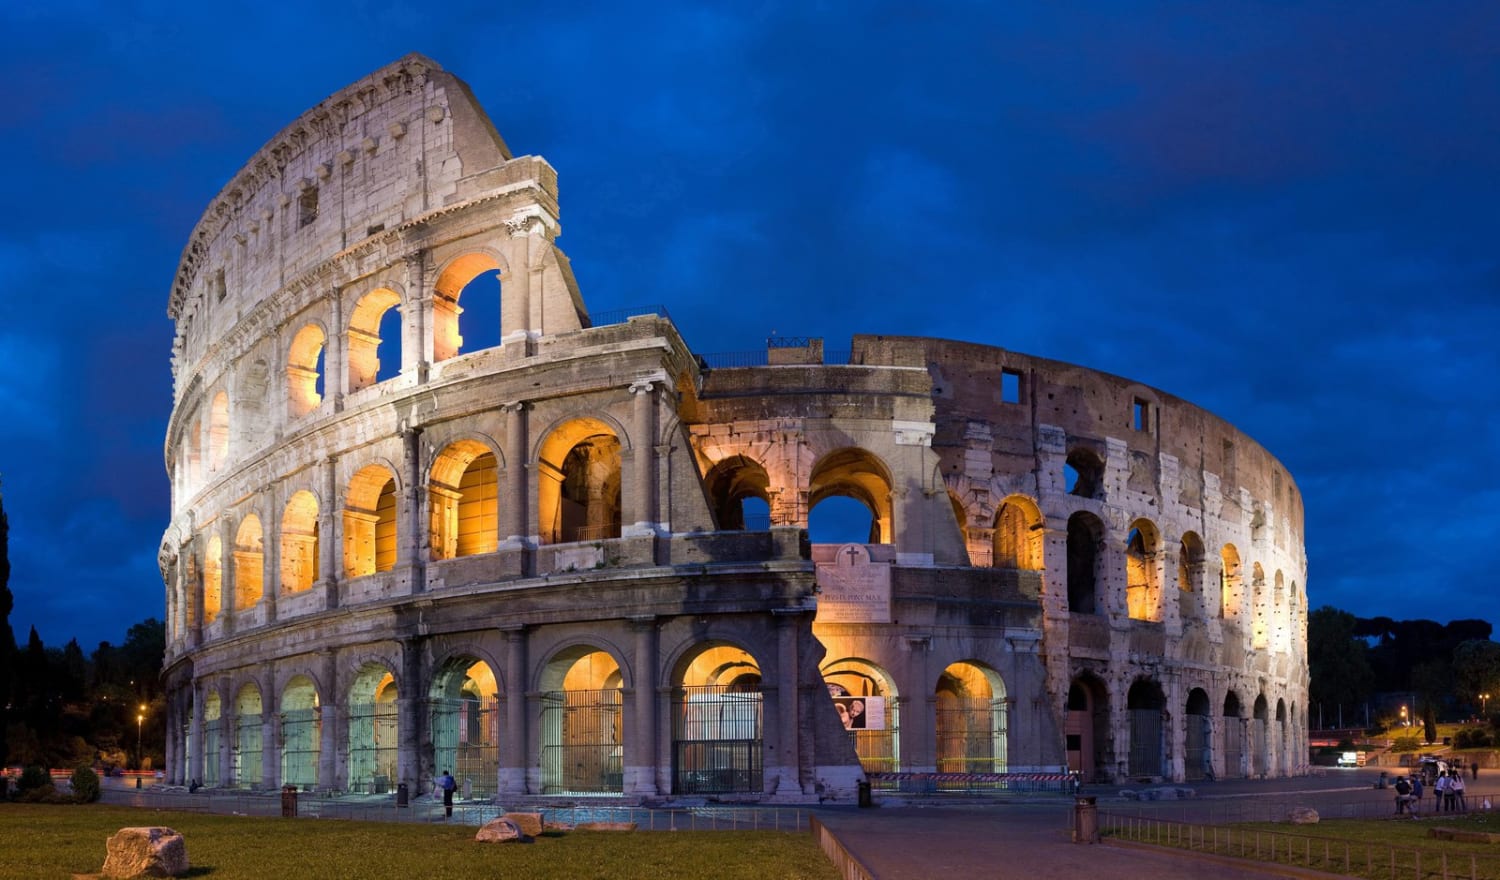 Italy Will Rebuild the Colosseum's Floor, Restoring Arena to Its Gladiator-Era Glory